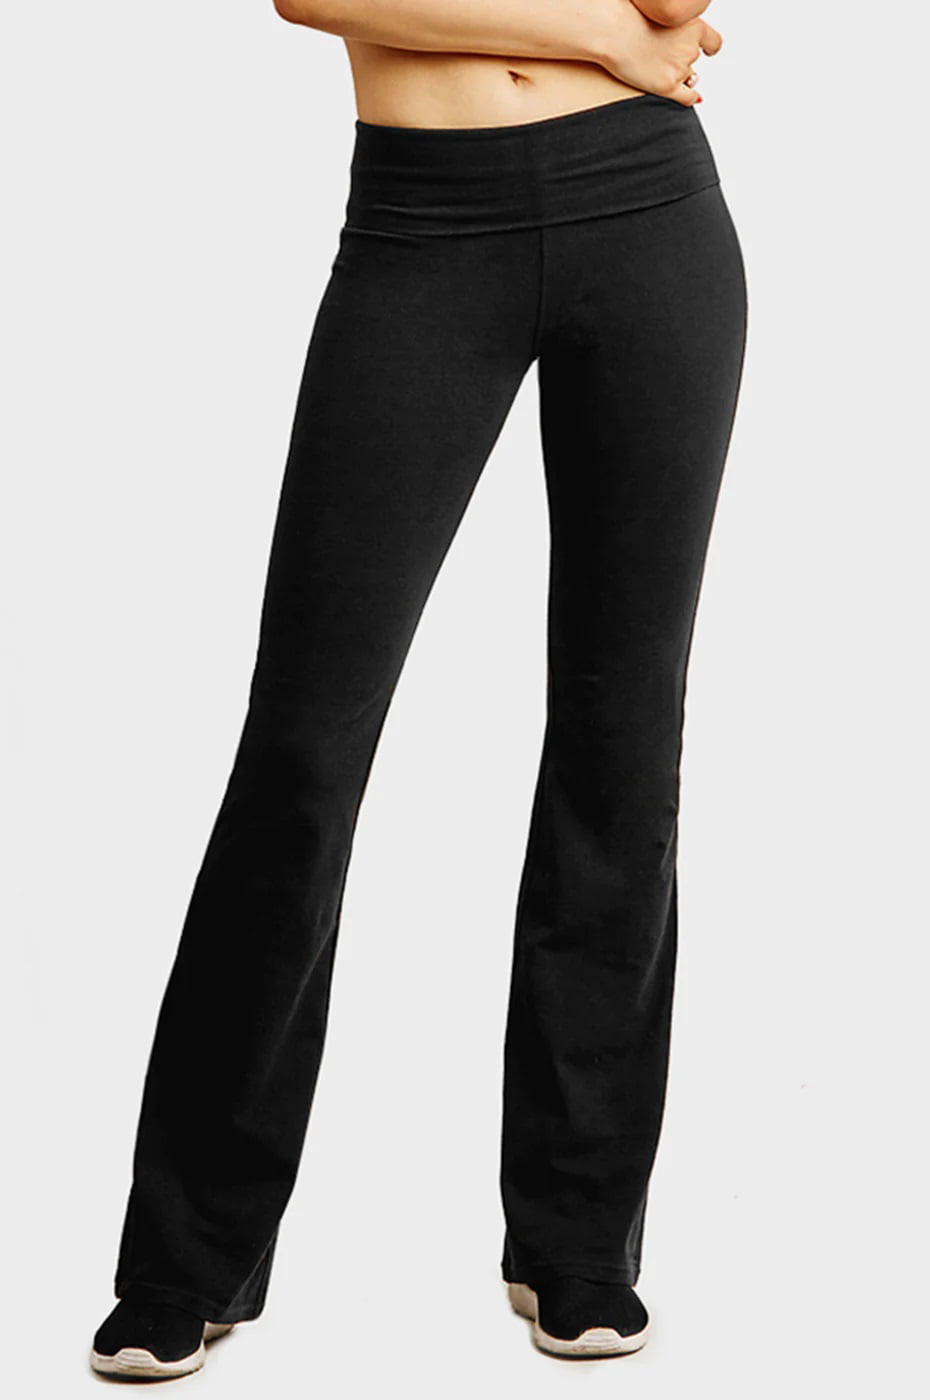 Women's Premium 250gsm Fold Over Cotton Spandex Lounge Yoga Pants